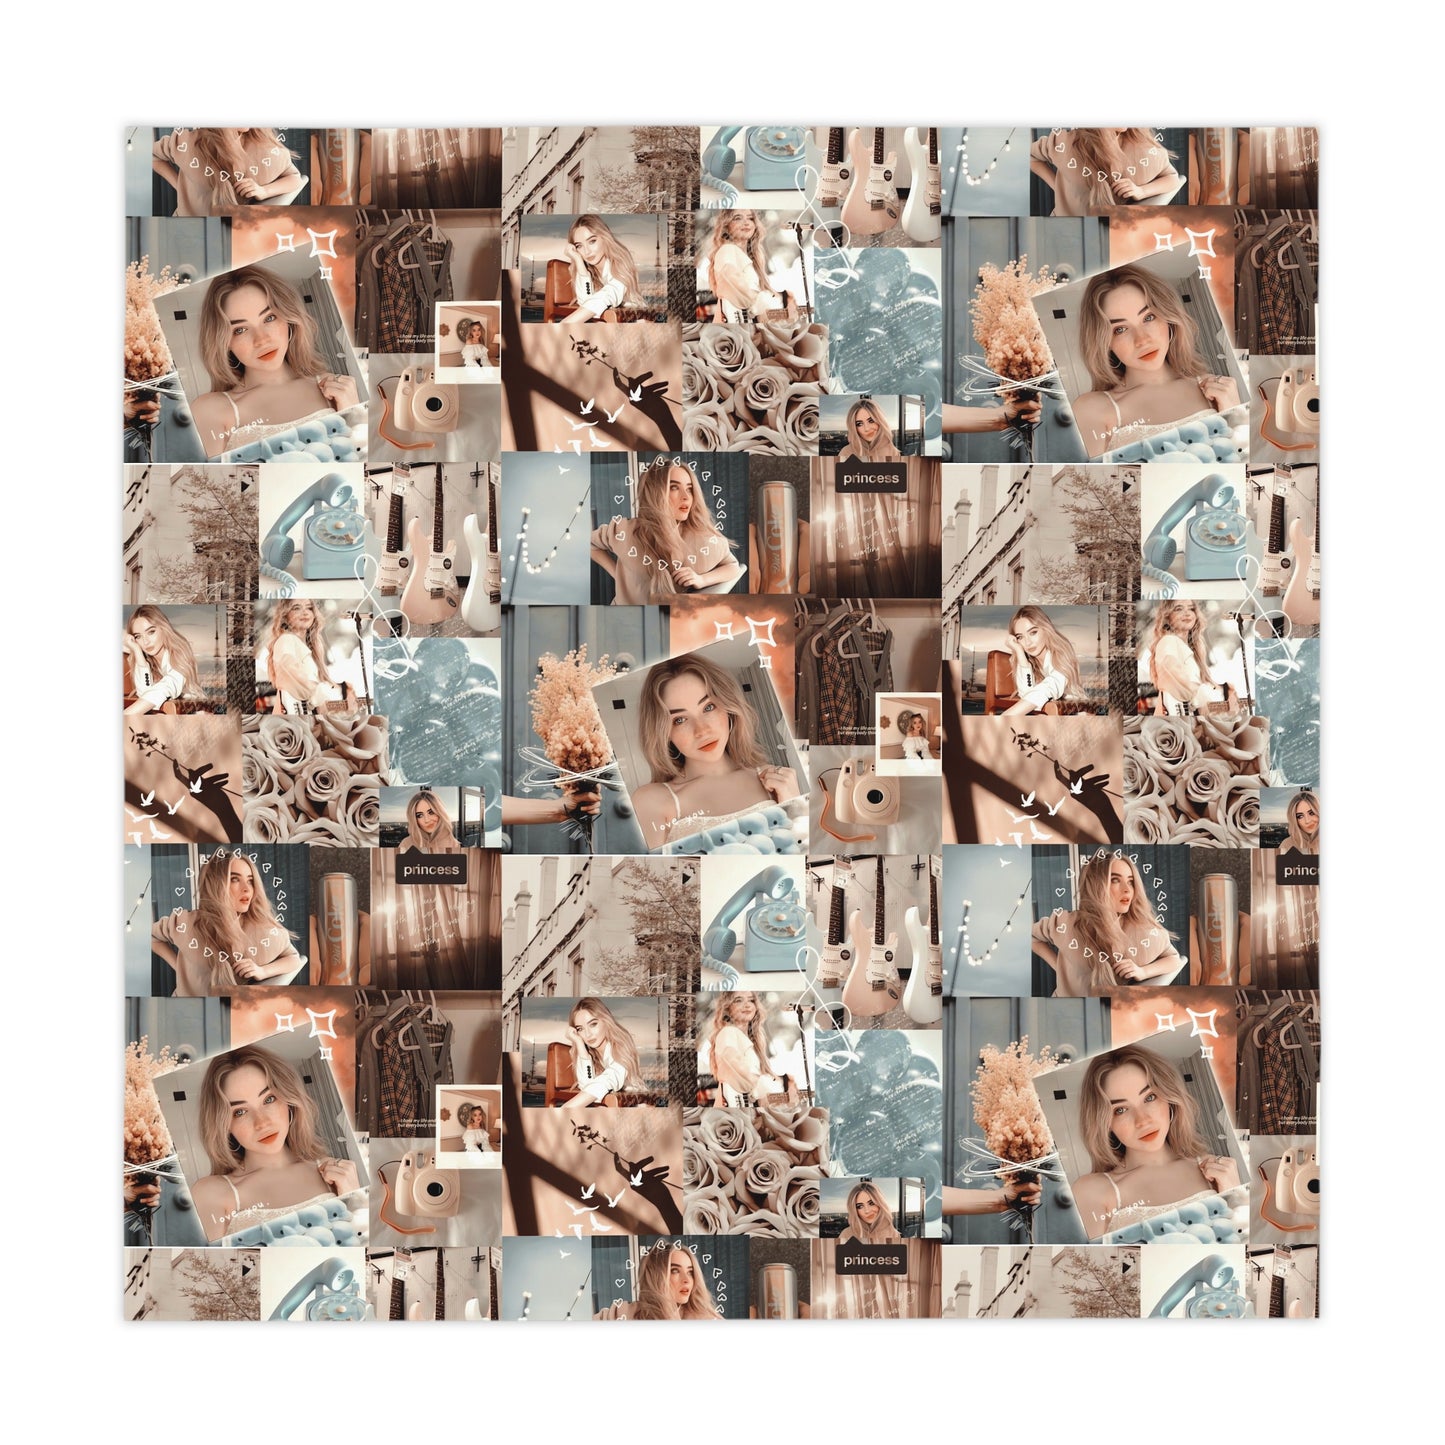 Sabrina Carpenter Peachy Princess Collage Tablecloth